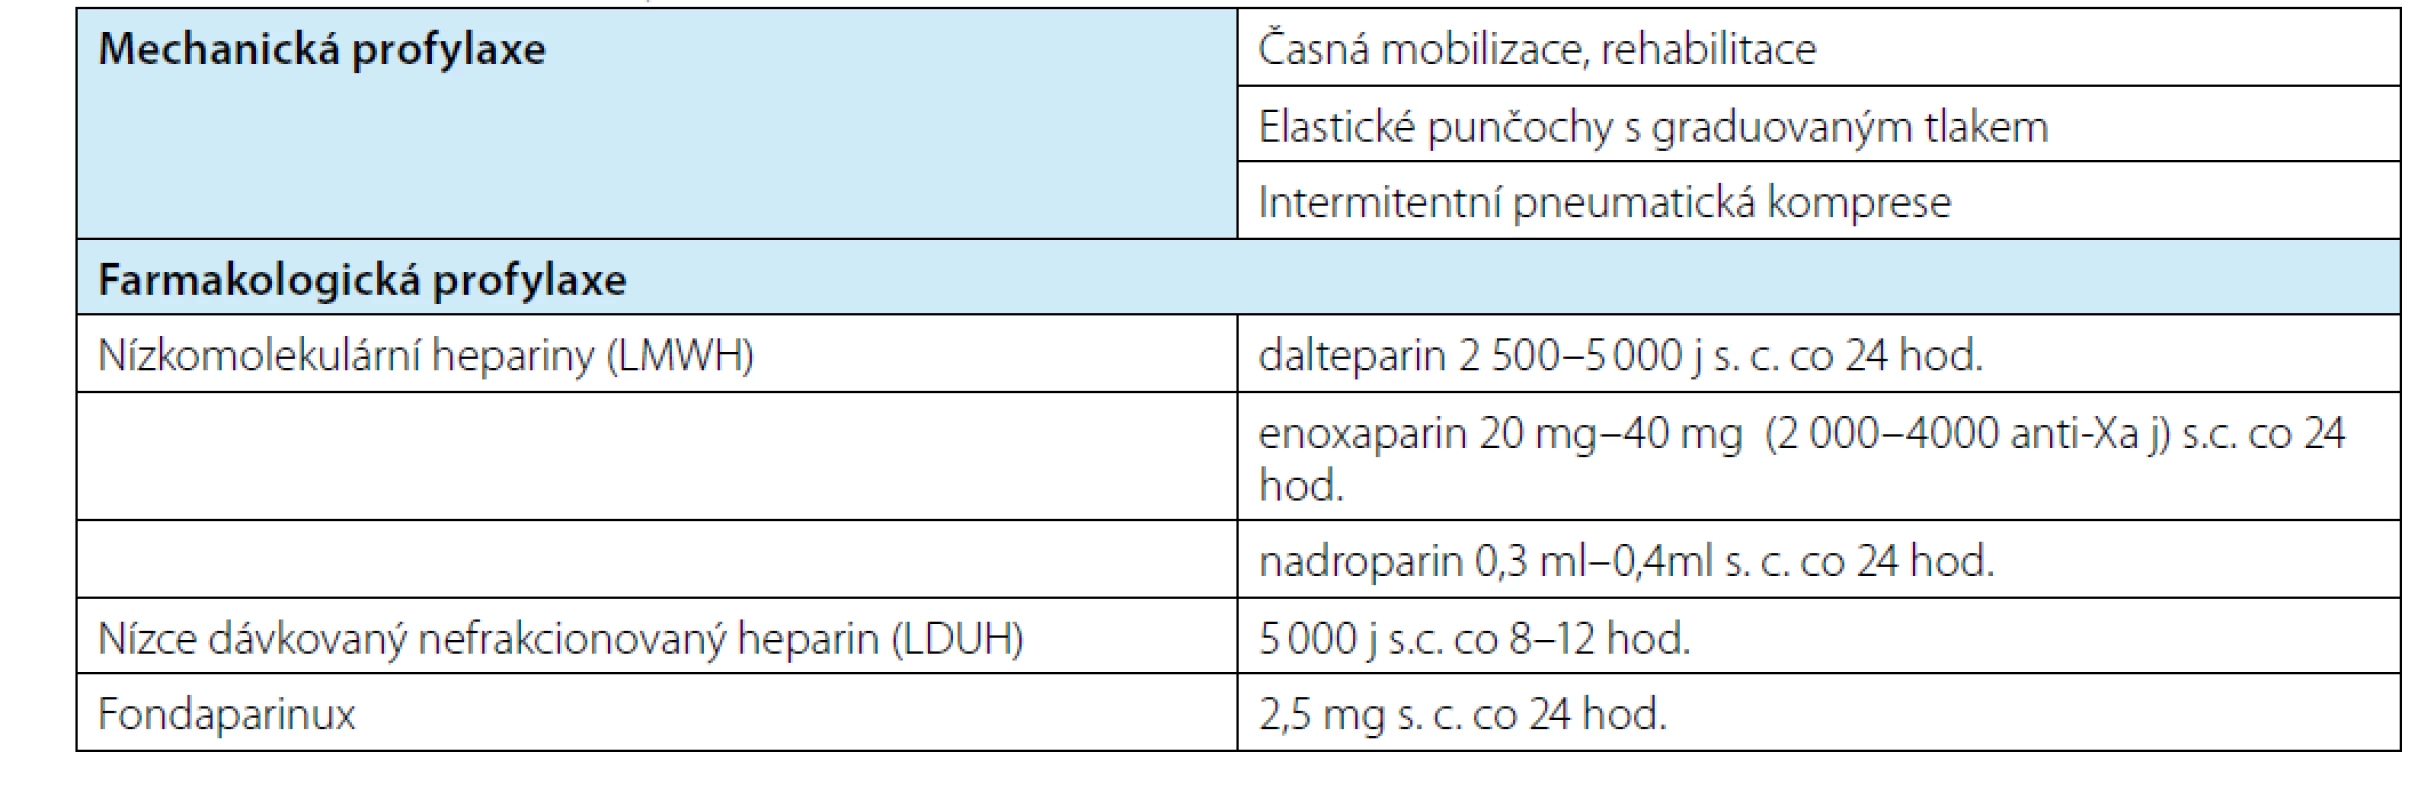 Metody profylaxe<br>
Tab. 2. Methods of prophylaxis